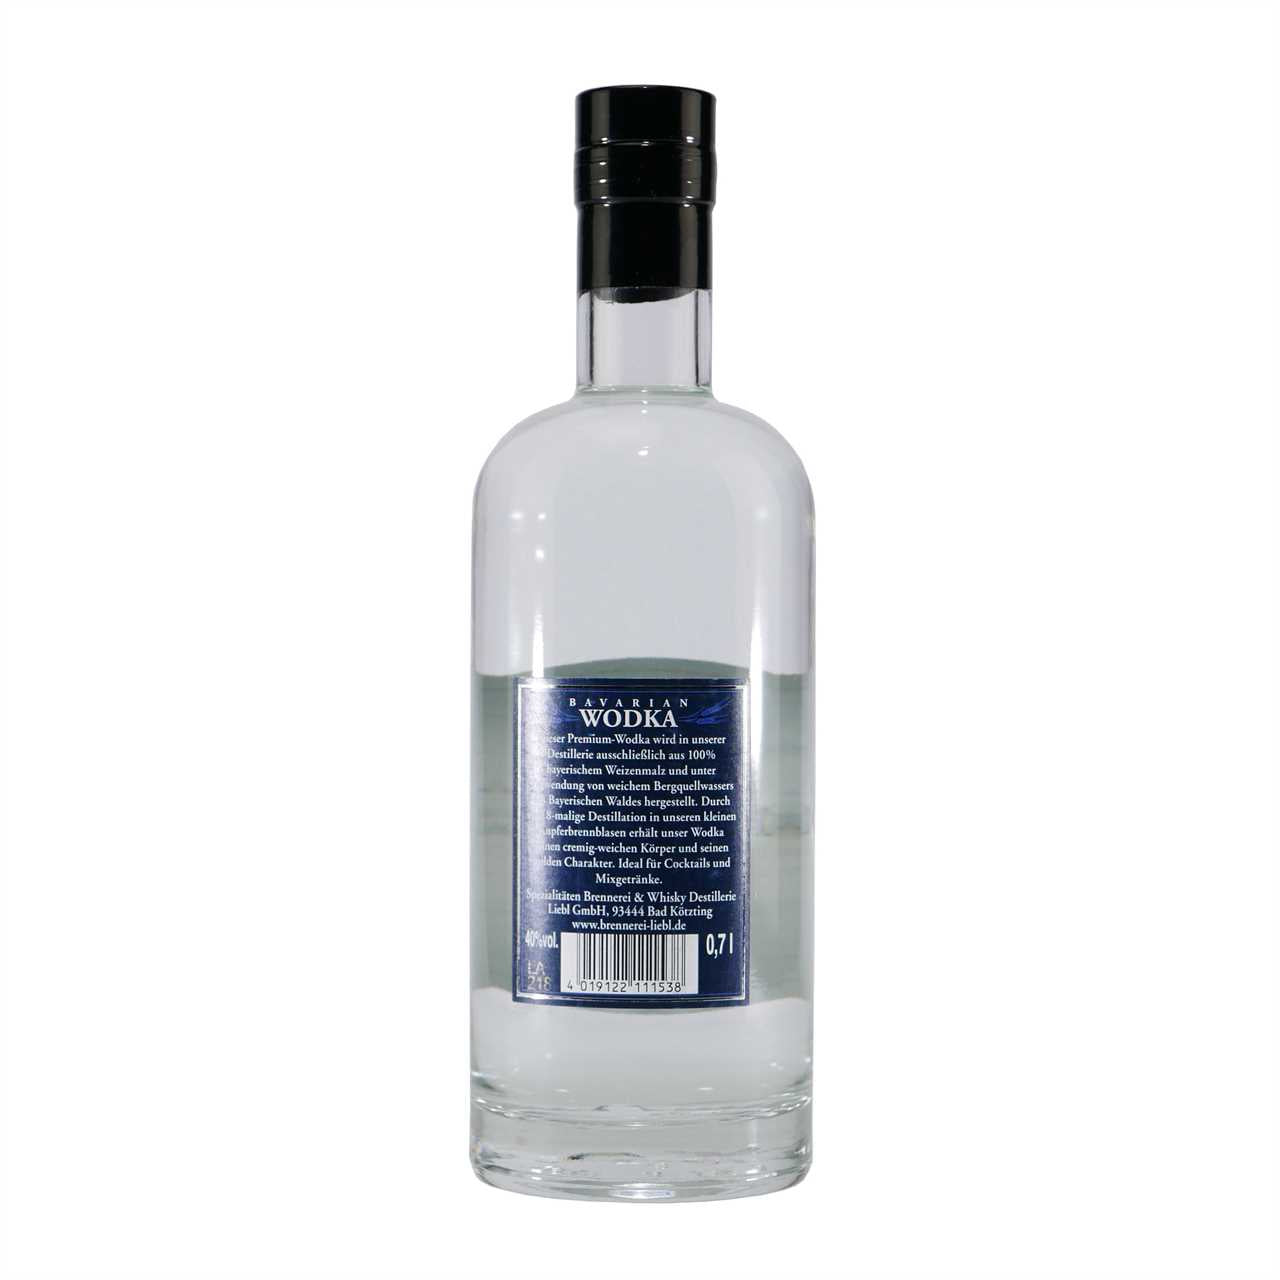 Liebl Bavarian Wodka